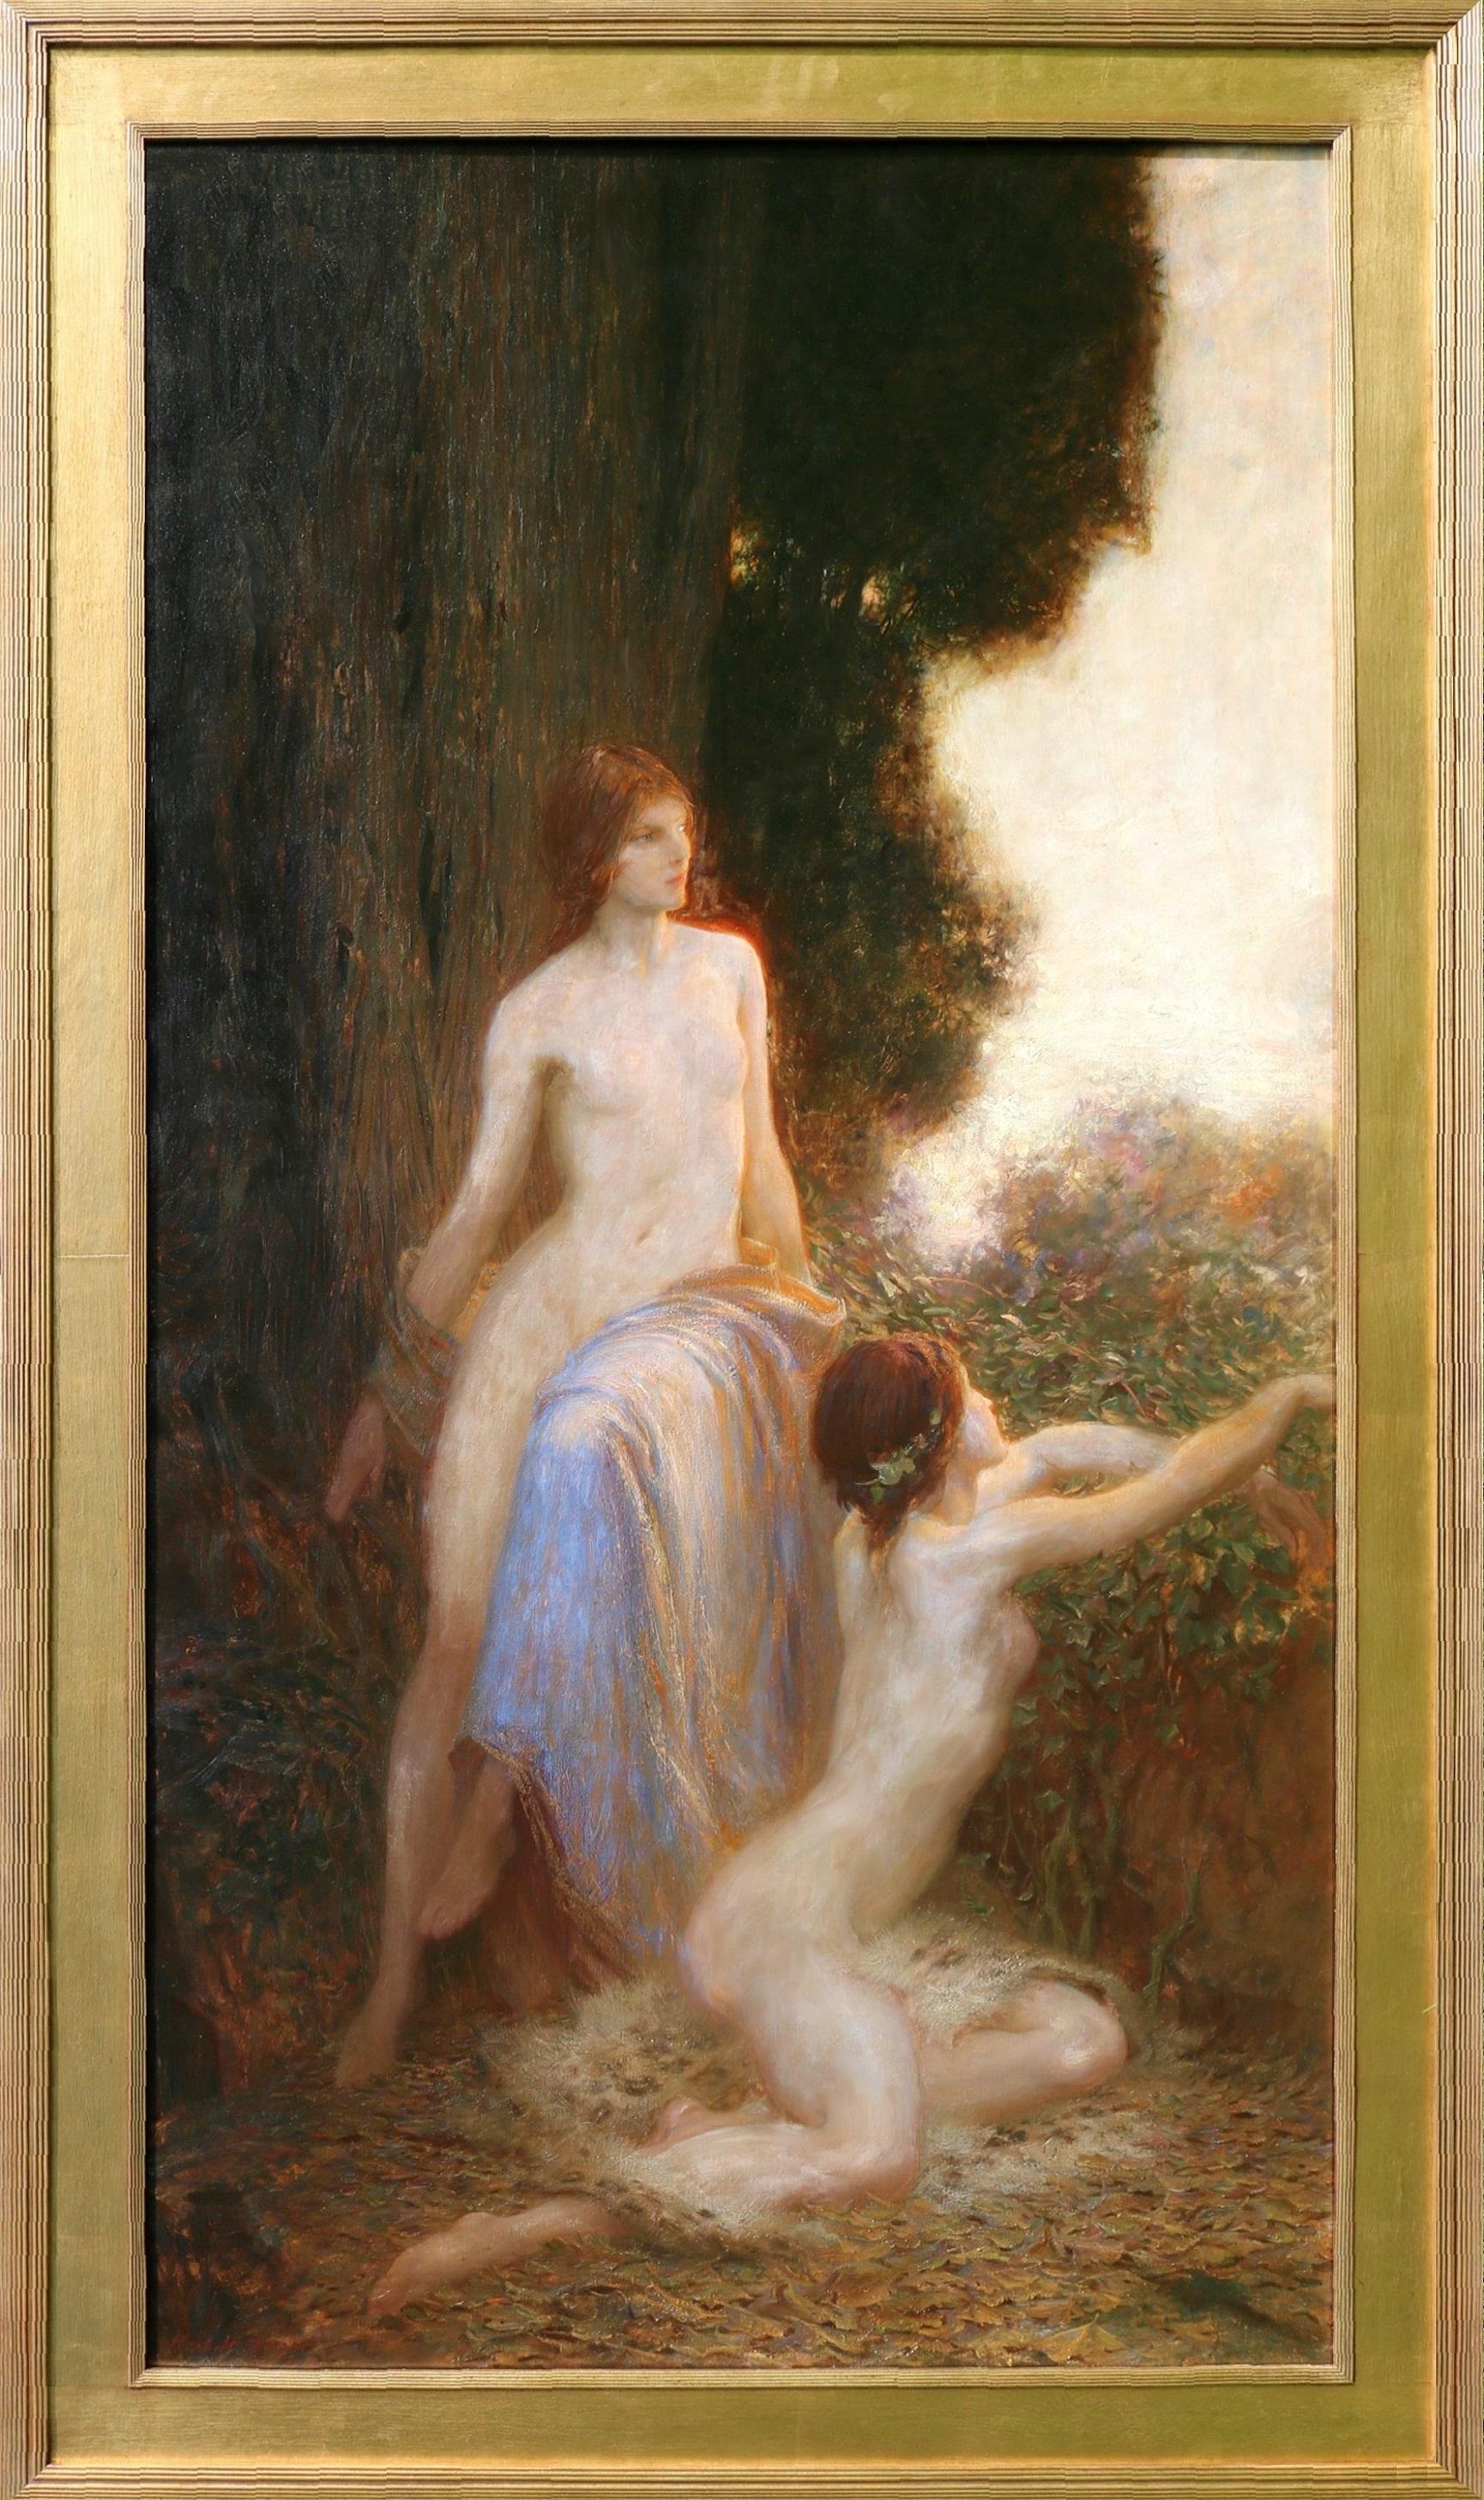 Awakening - Monumental Royal Academy Oil Painting of Nymphs Neoclassical Nudes - Brown Nude Painting by Herbert James Draper 